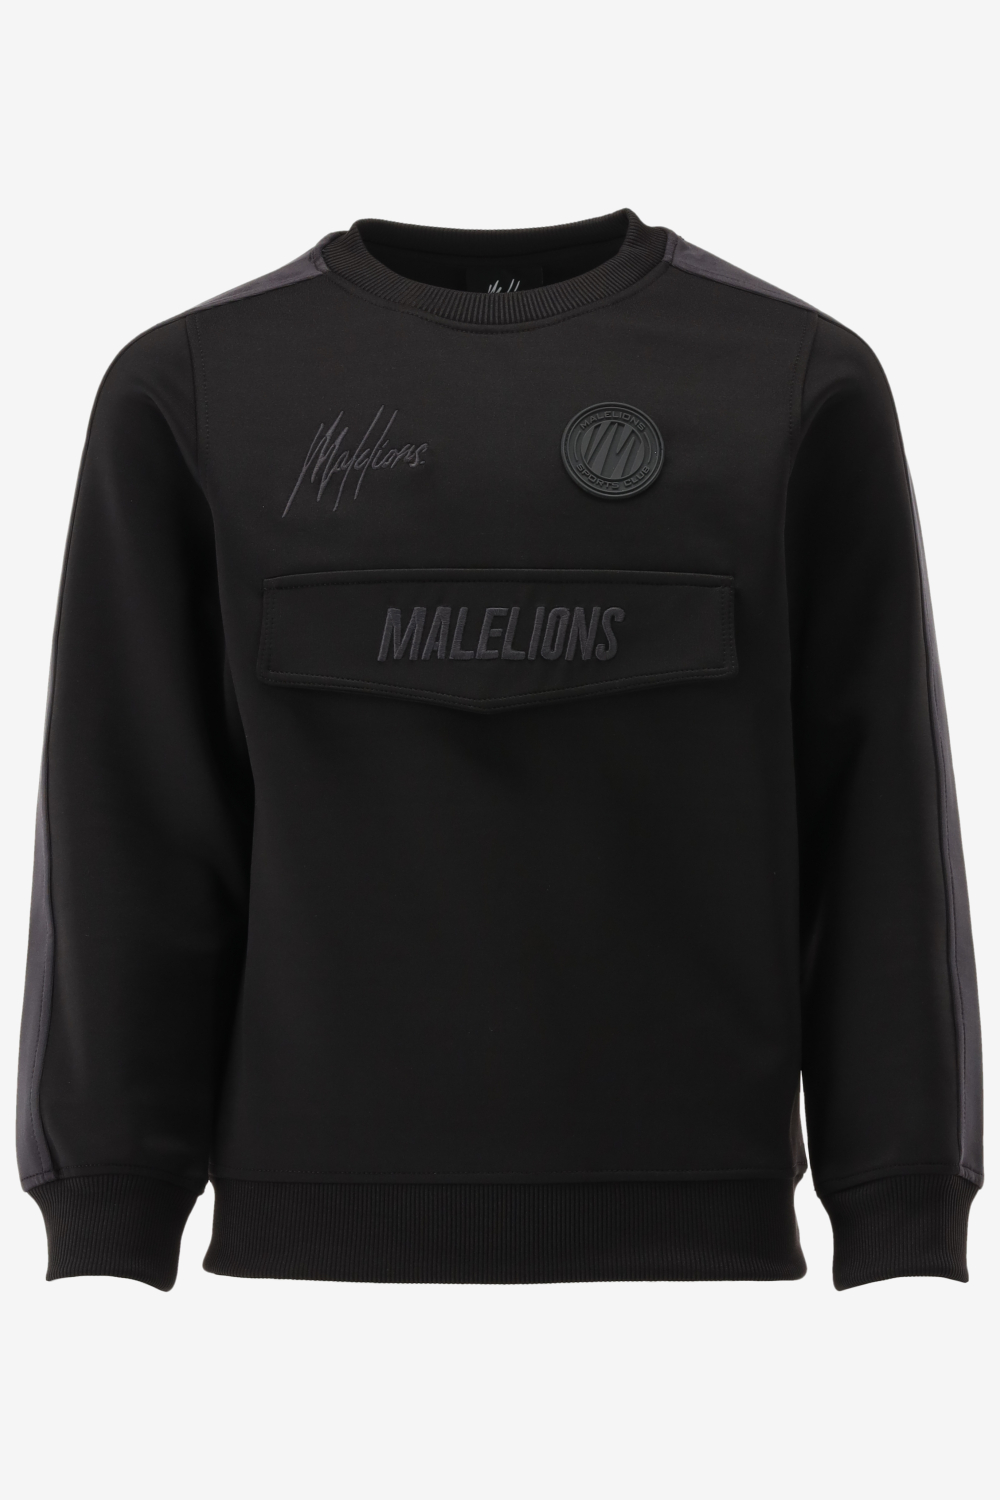 Malelions sweater maat 140/10J